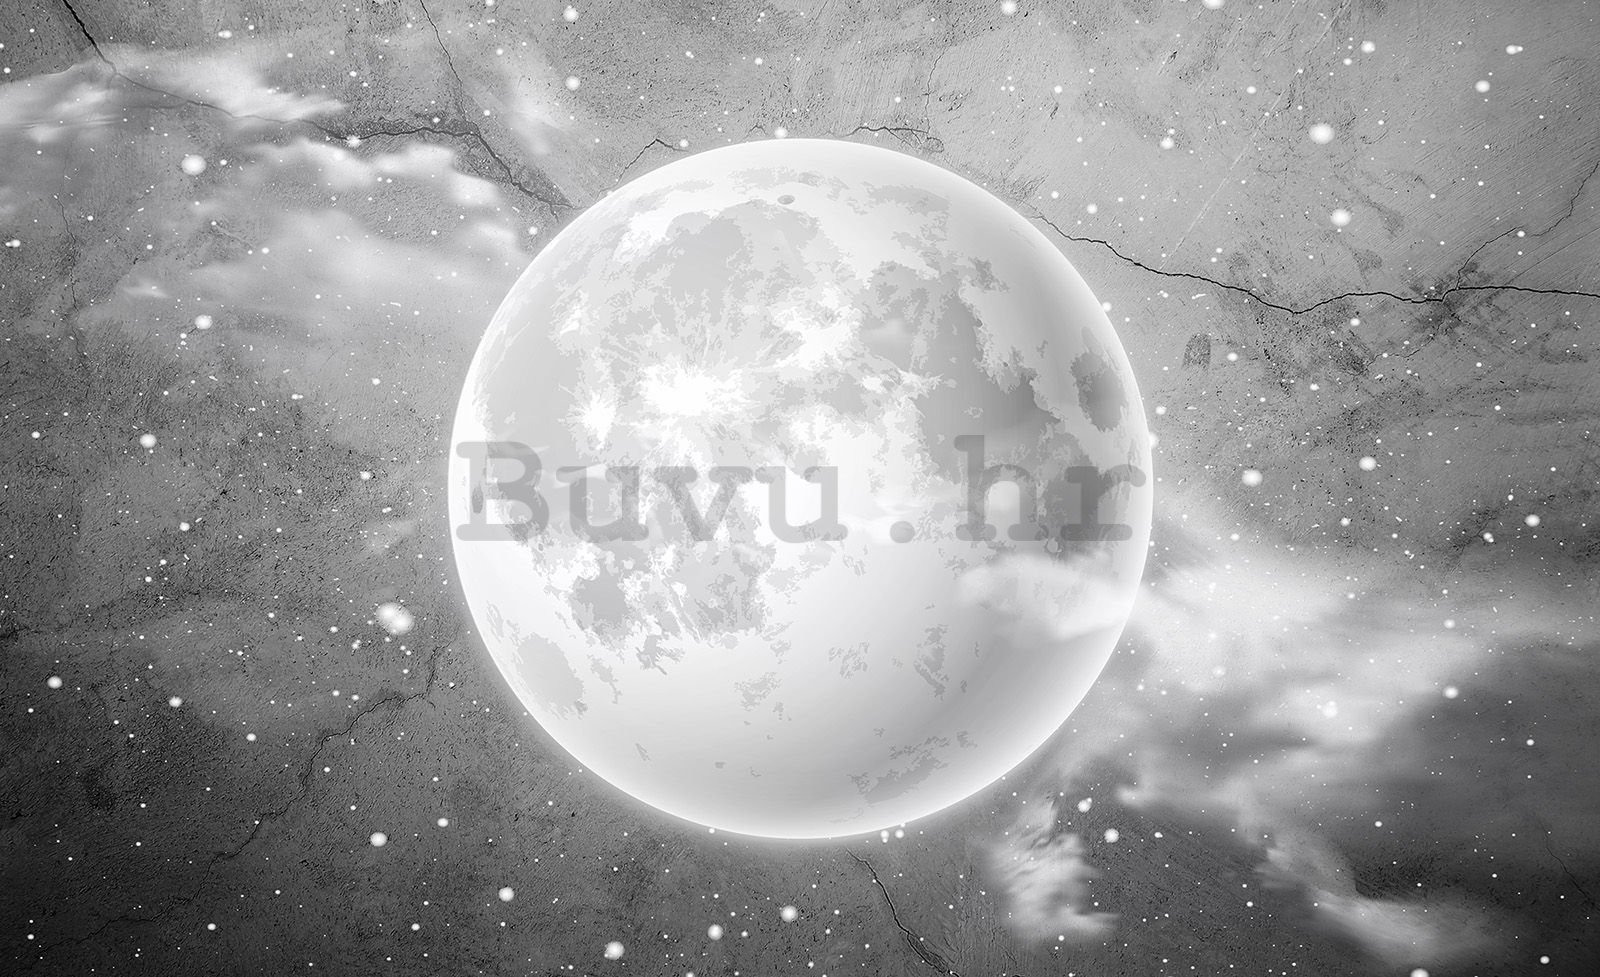 Foto tapeta: Mjesec na nebu (1) - 368x254 cm